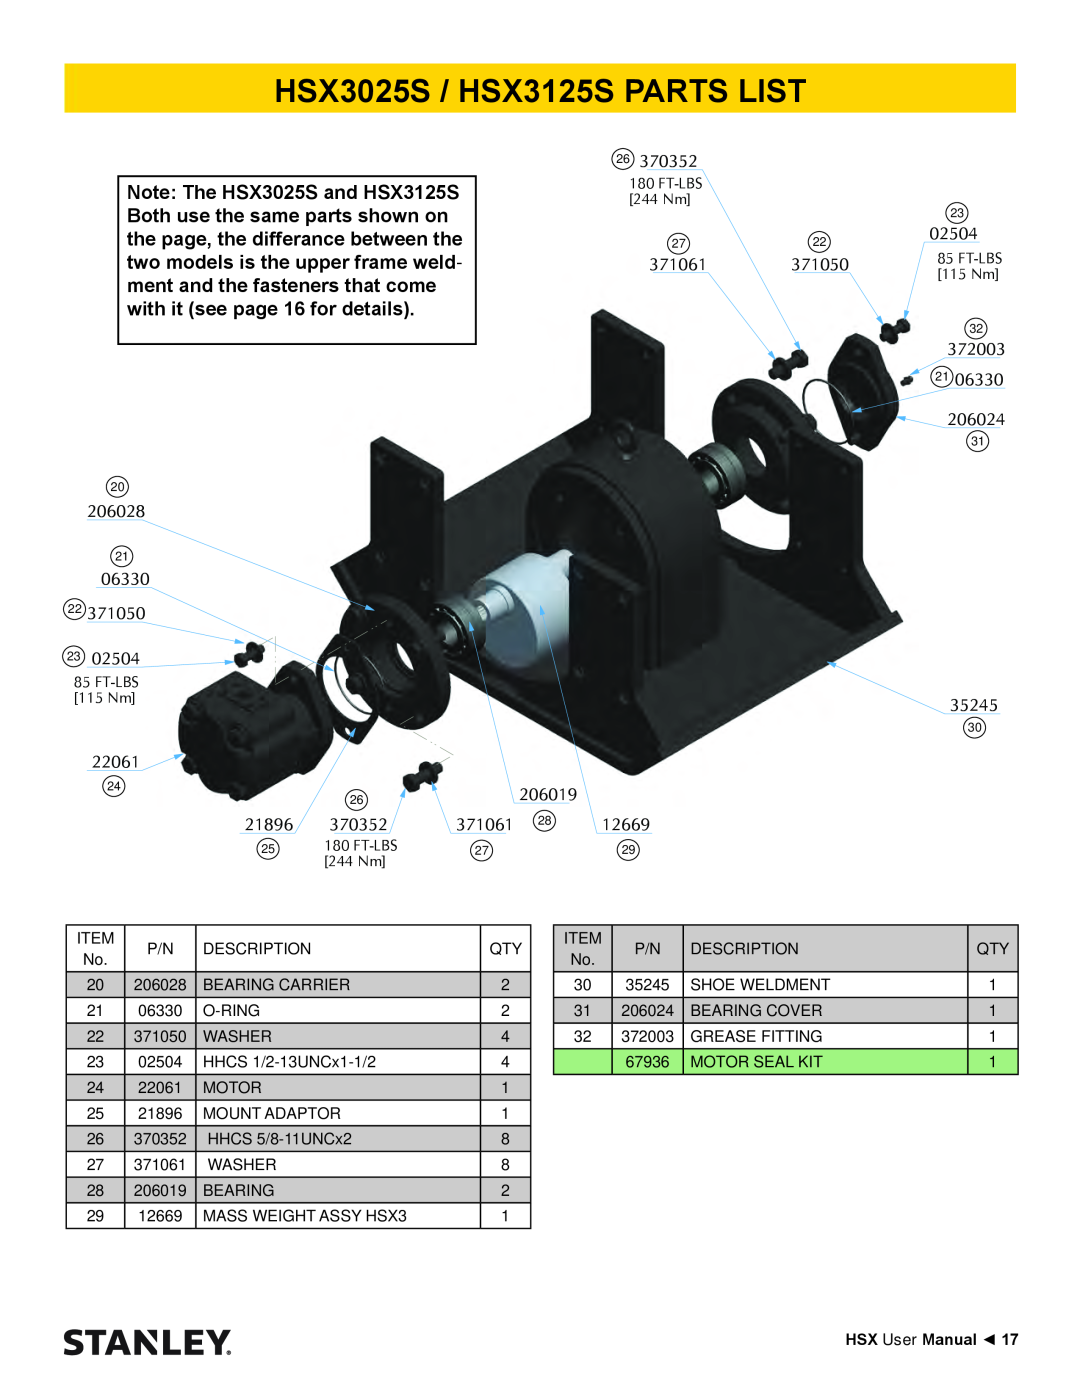 Stanley Black & Decker HSX SERIES user manual HSX3025S / HSX3125S PARTS LIST, Ft-Lbs 